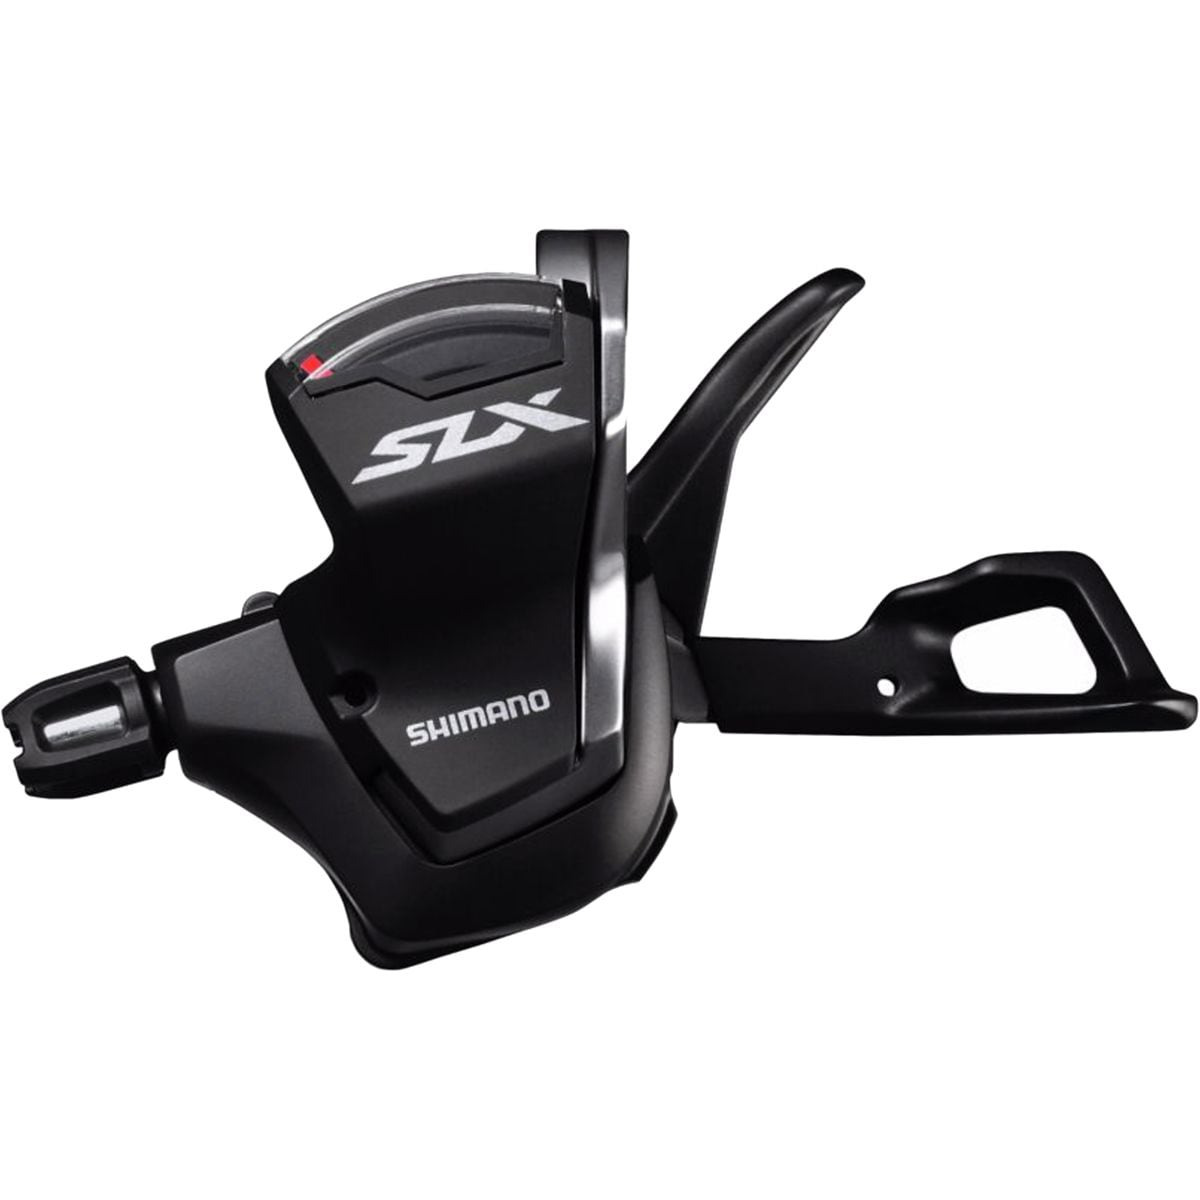 Shimano SLX SL-M7000 Trigger Shifter